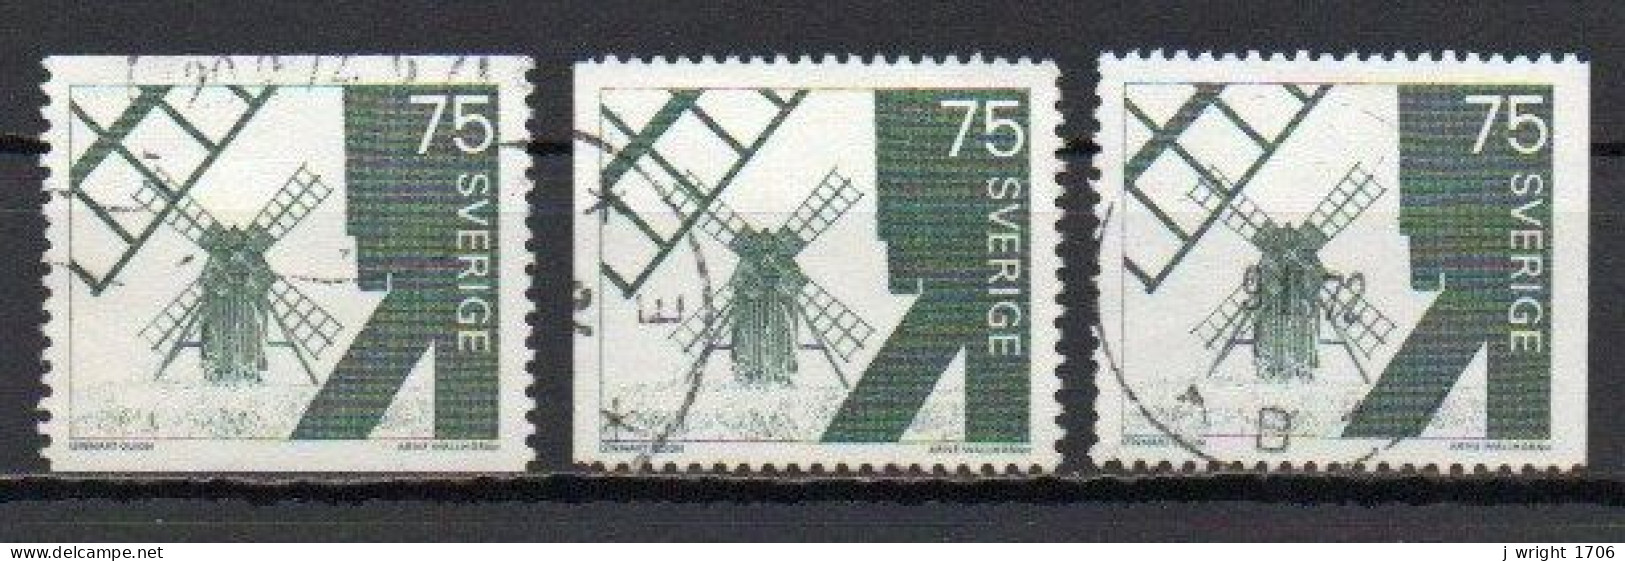 Sweden, 1971, Windmill Ölana Island, 75ö, USED - Gebraucht